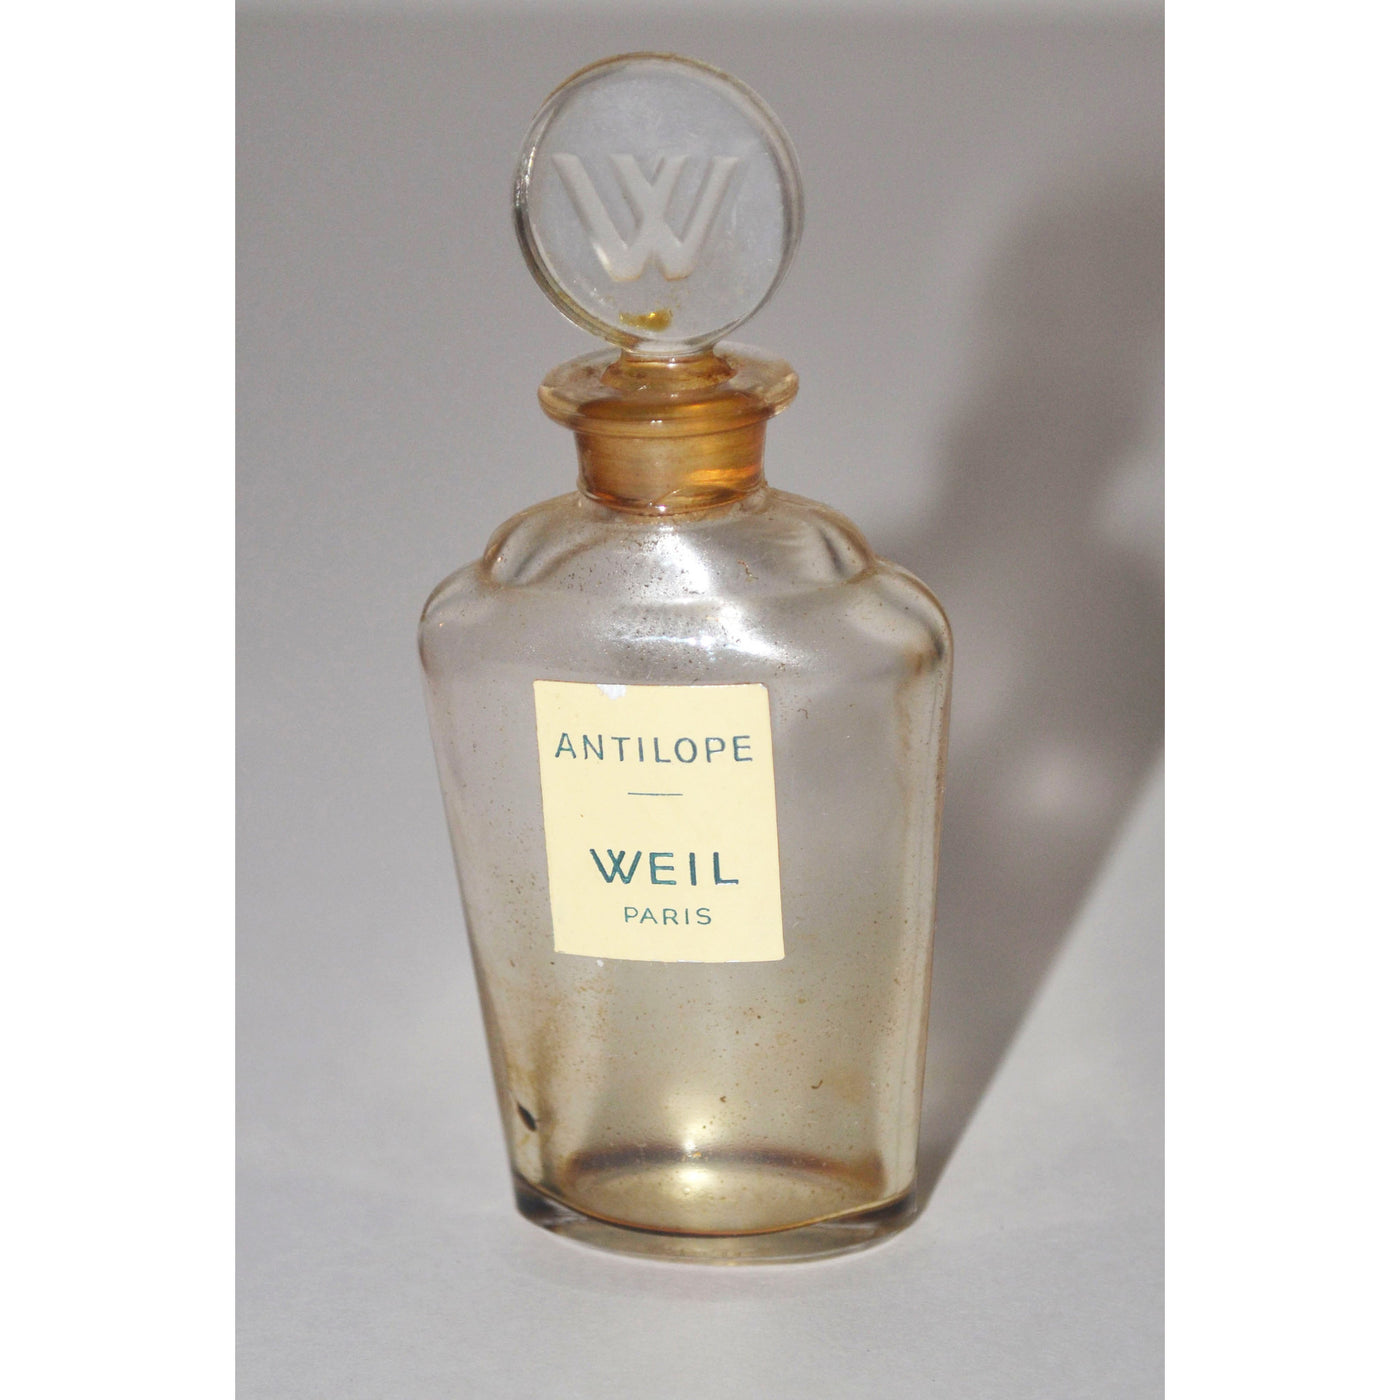 Vintage Antilope Perfume Bottle By Weil